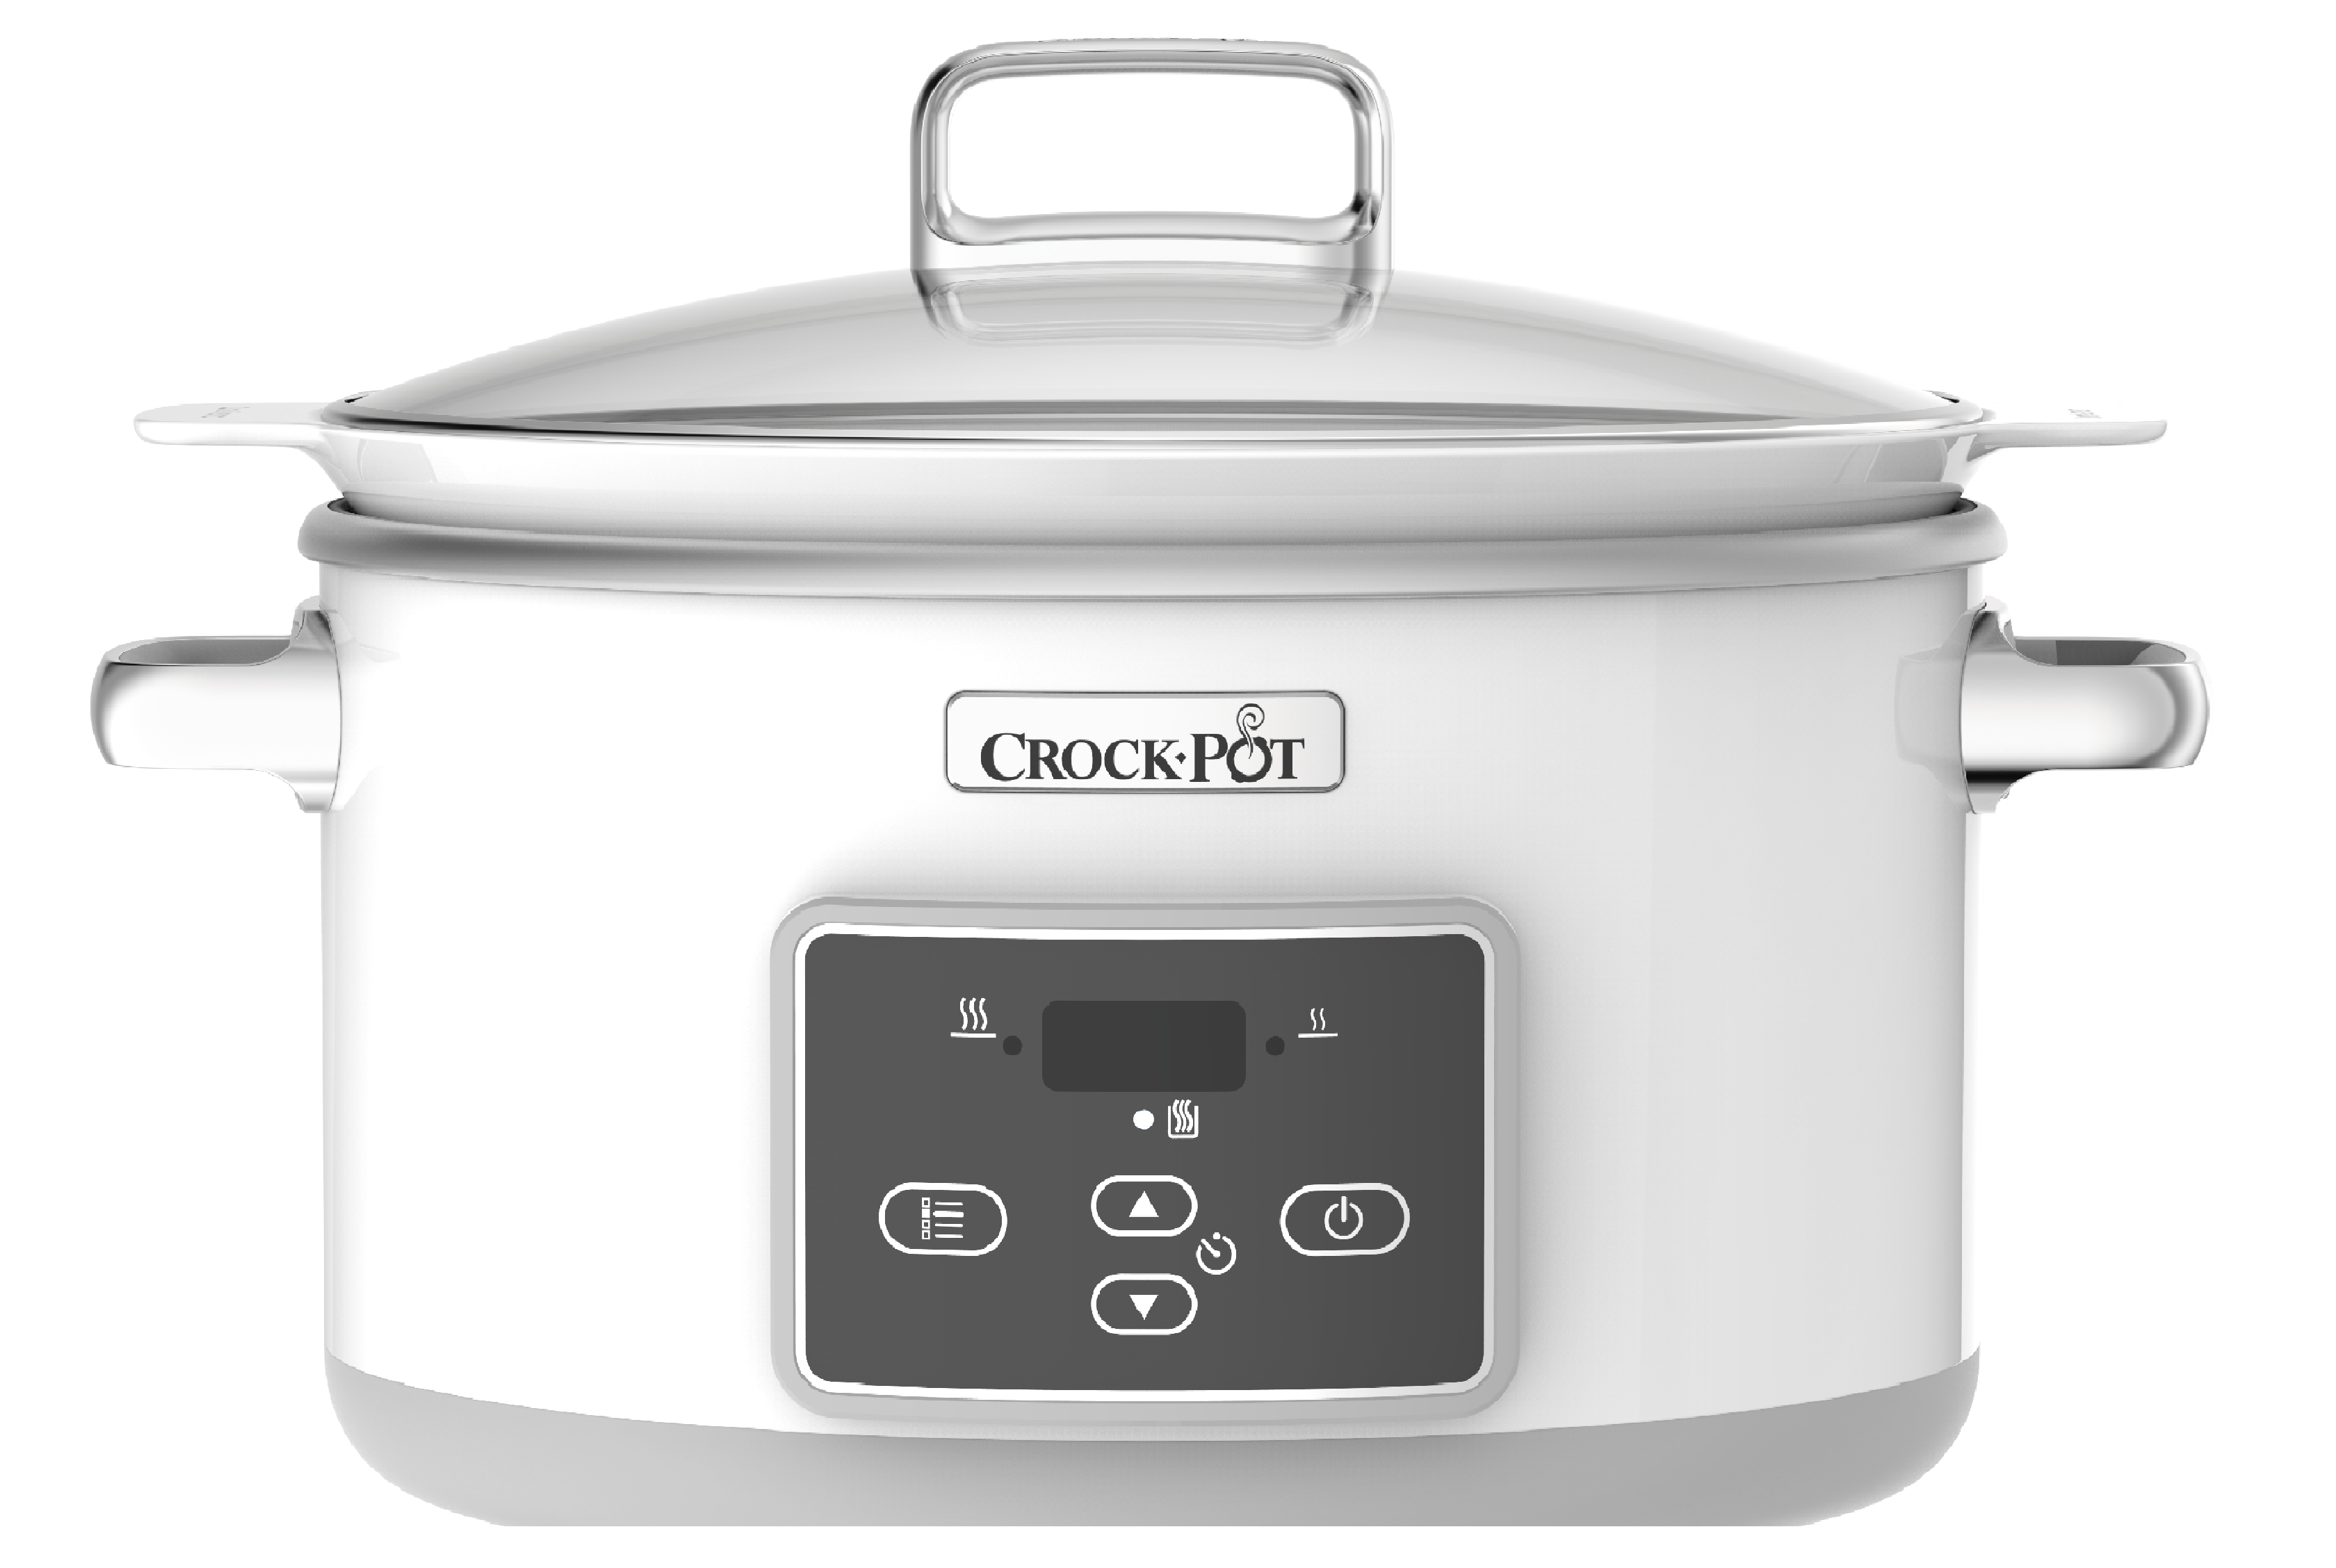 Crock-Pot olla de cocción lenta digital tecnología TimeSelect 5,6